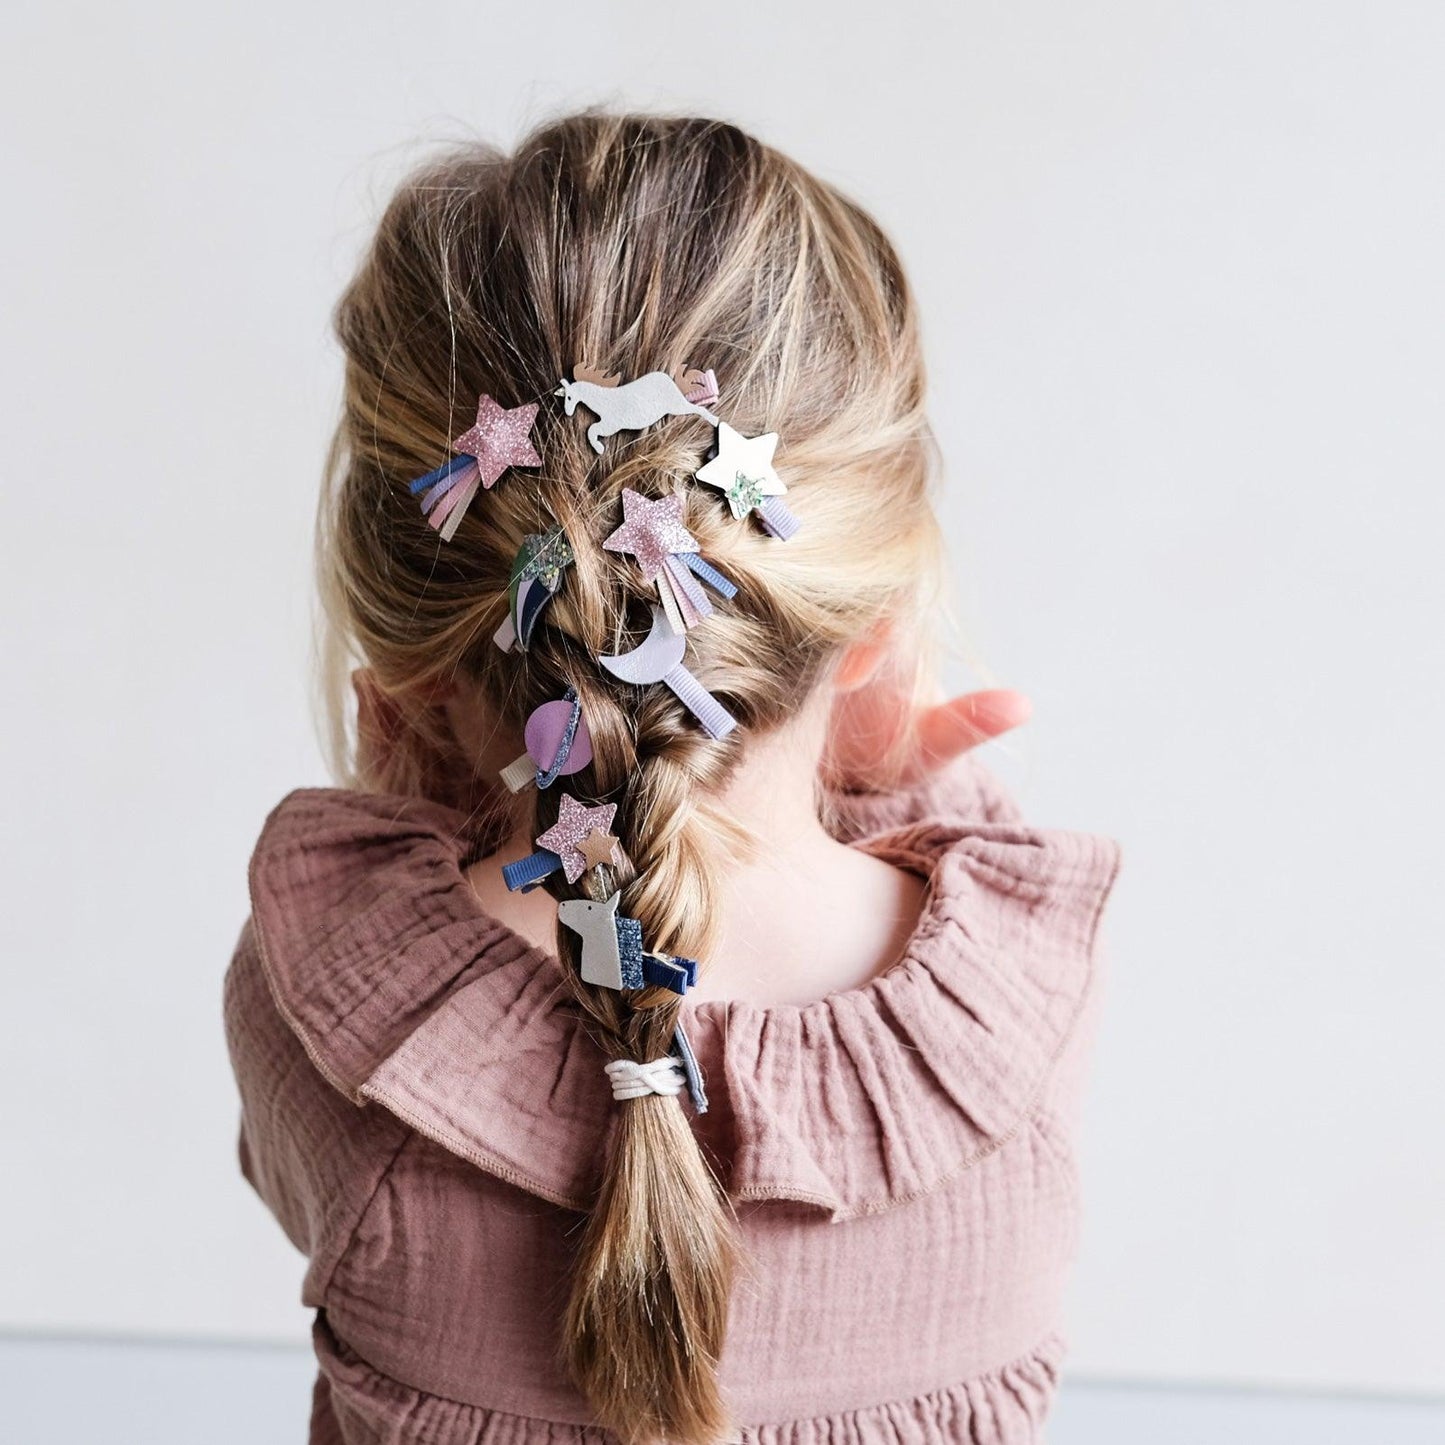 Einhorn Mini Haarspangen - Nook' d' Mel - Kinder Concept Store